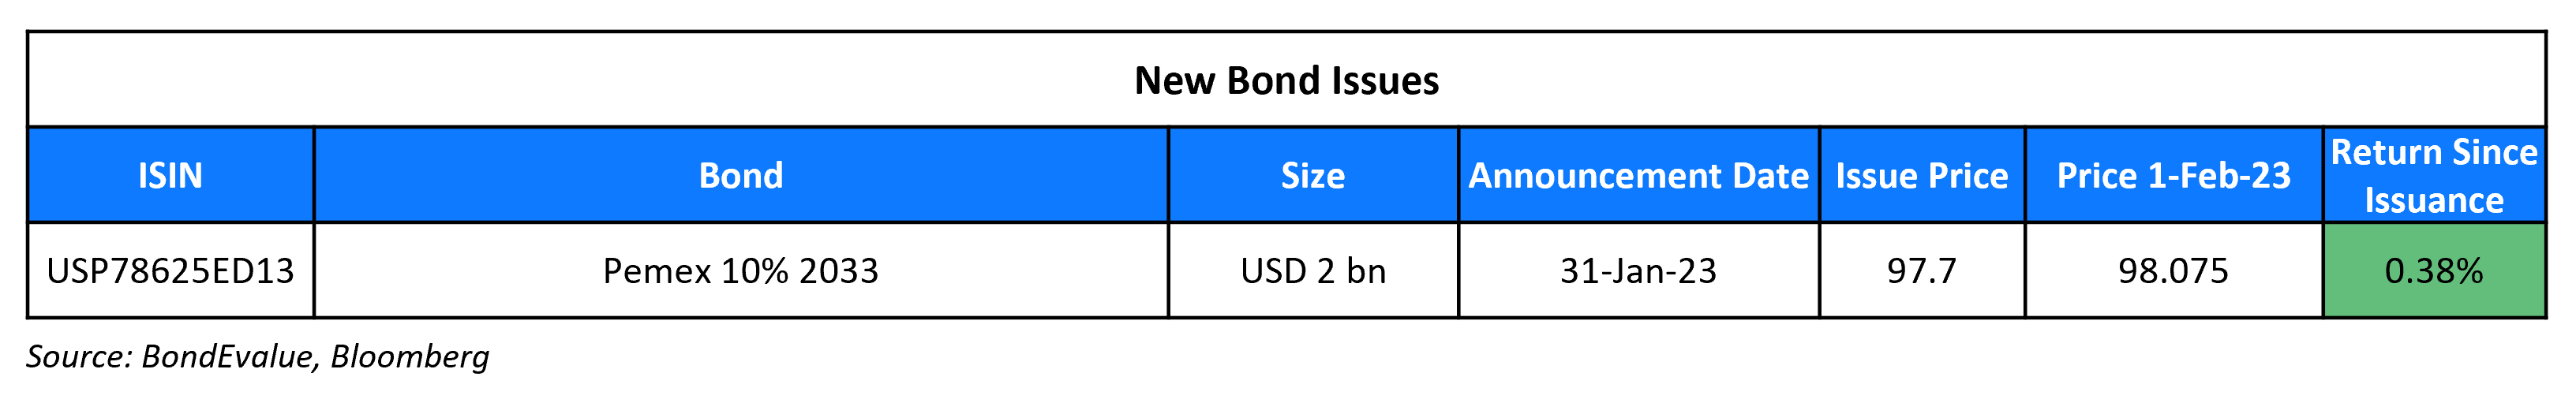 New Bond Issues 1 Feb 23